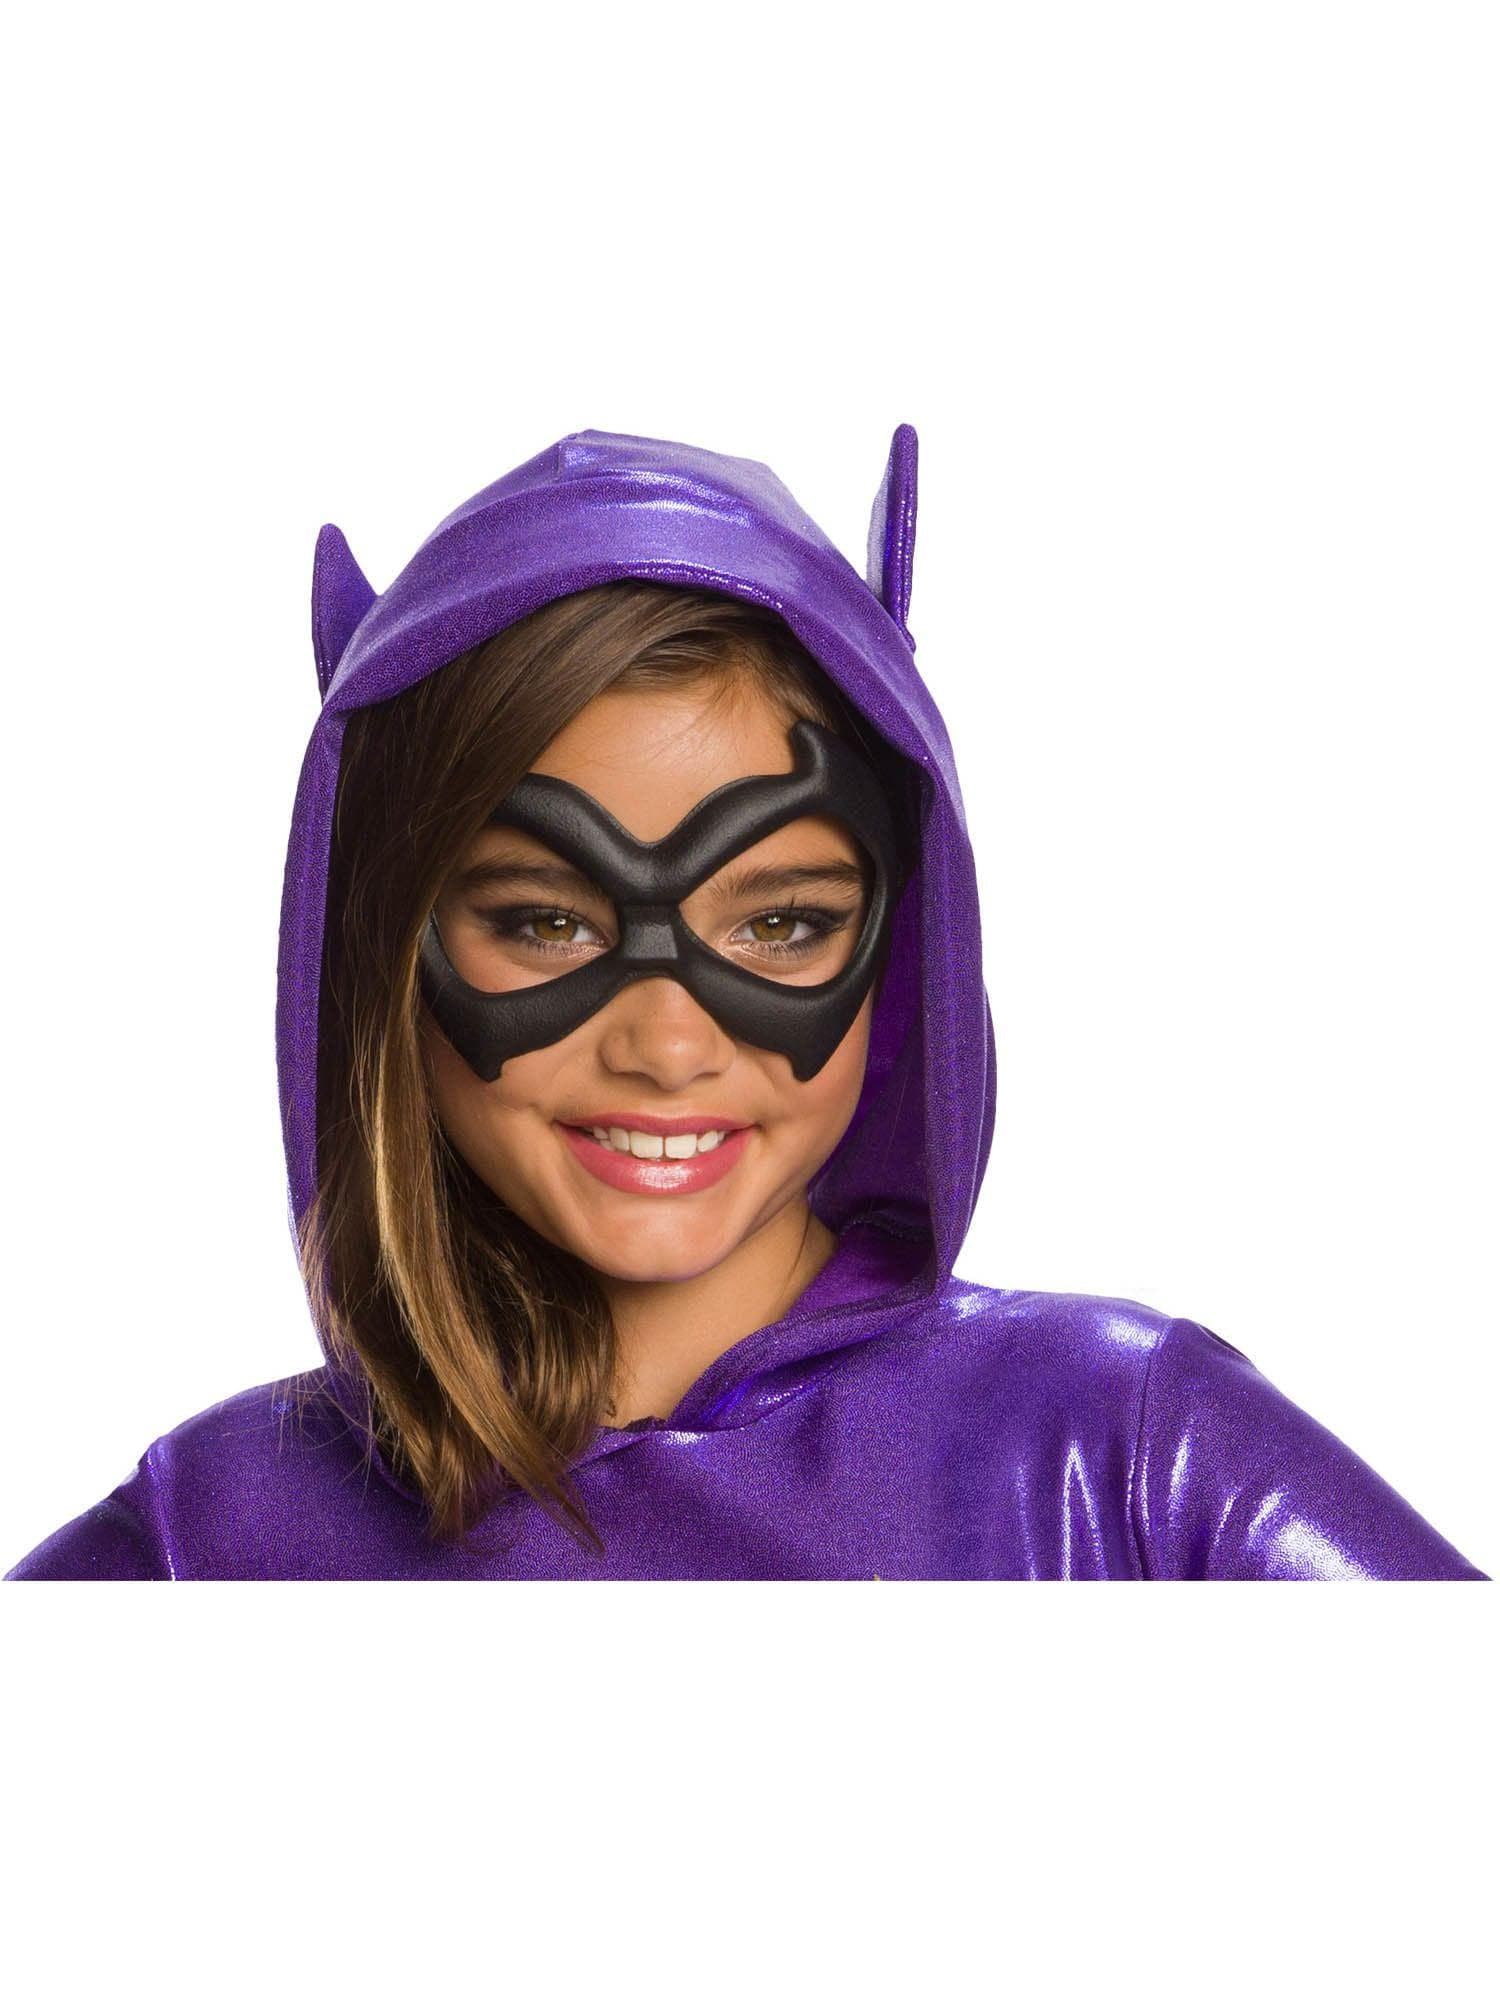 Girls' DC Superhero Girls Batgirl Mask - costumes.com